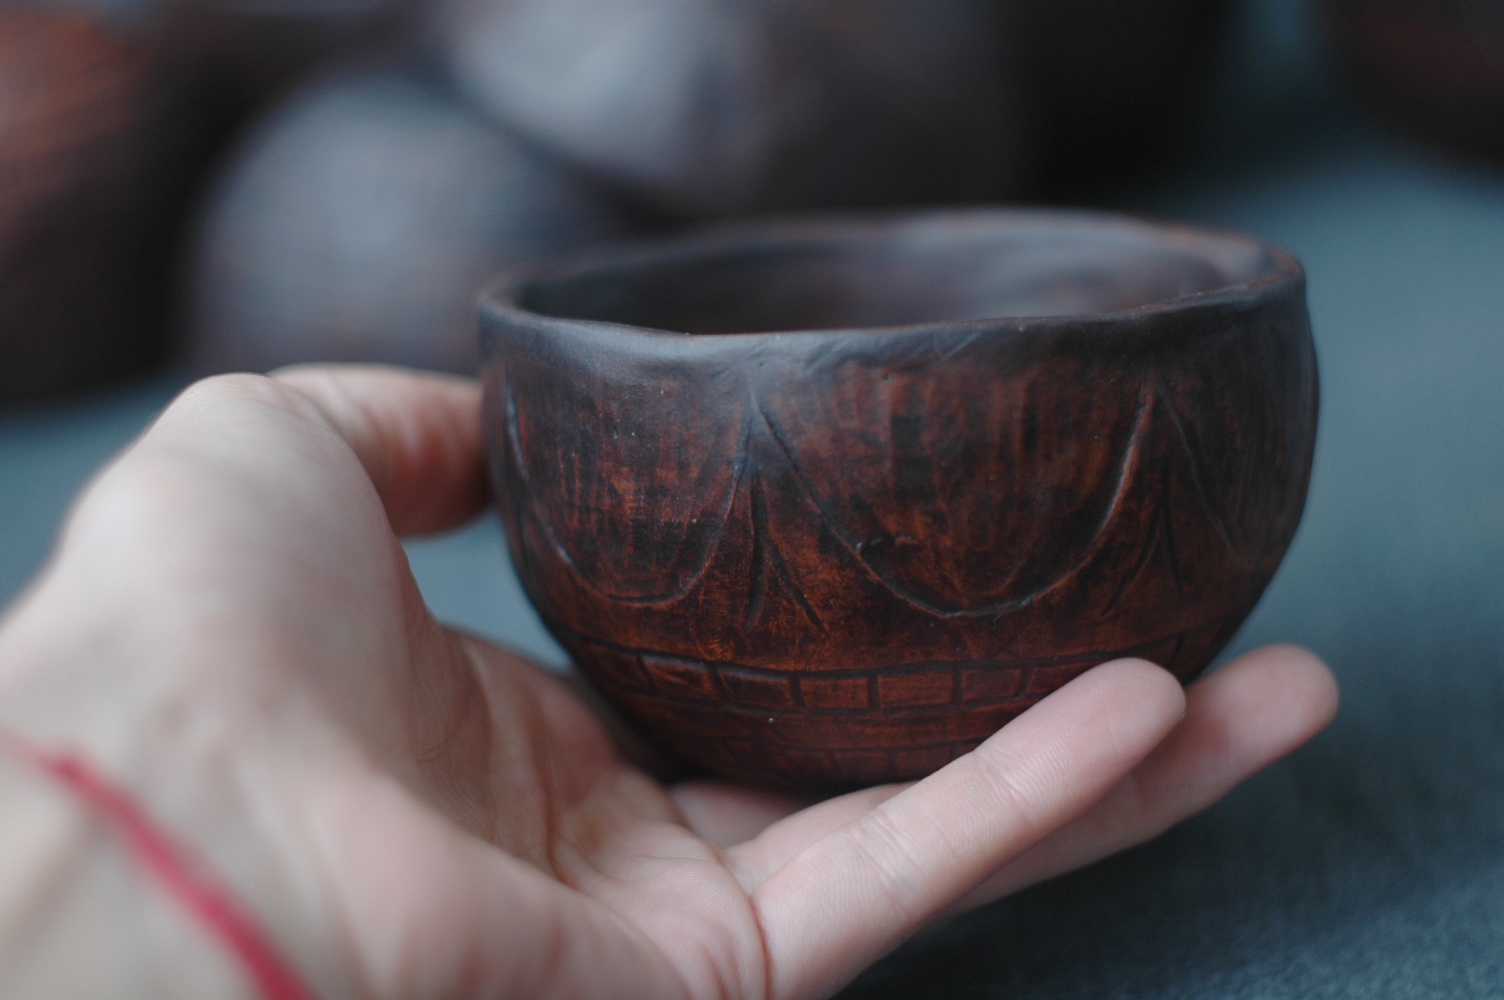 Pottery ceramic bowl “Sun” ~7oz